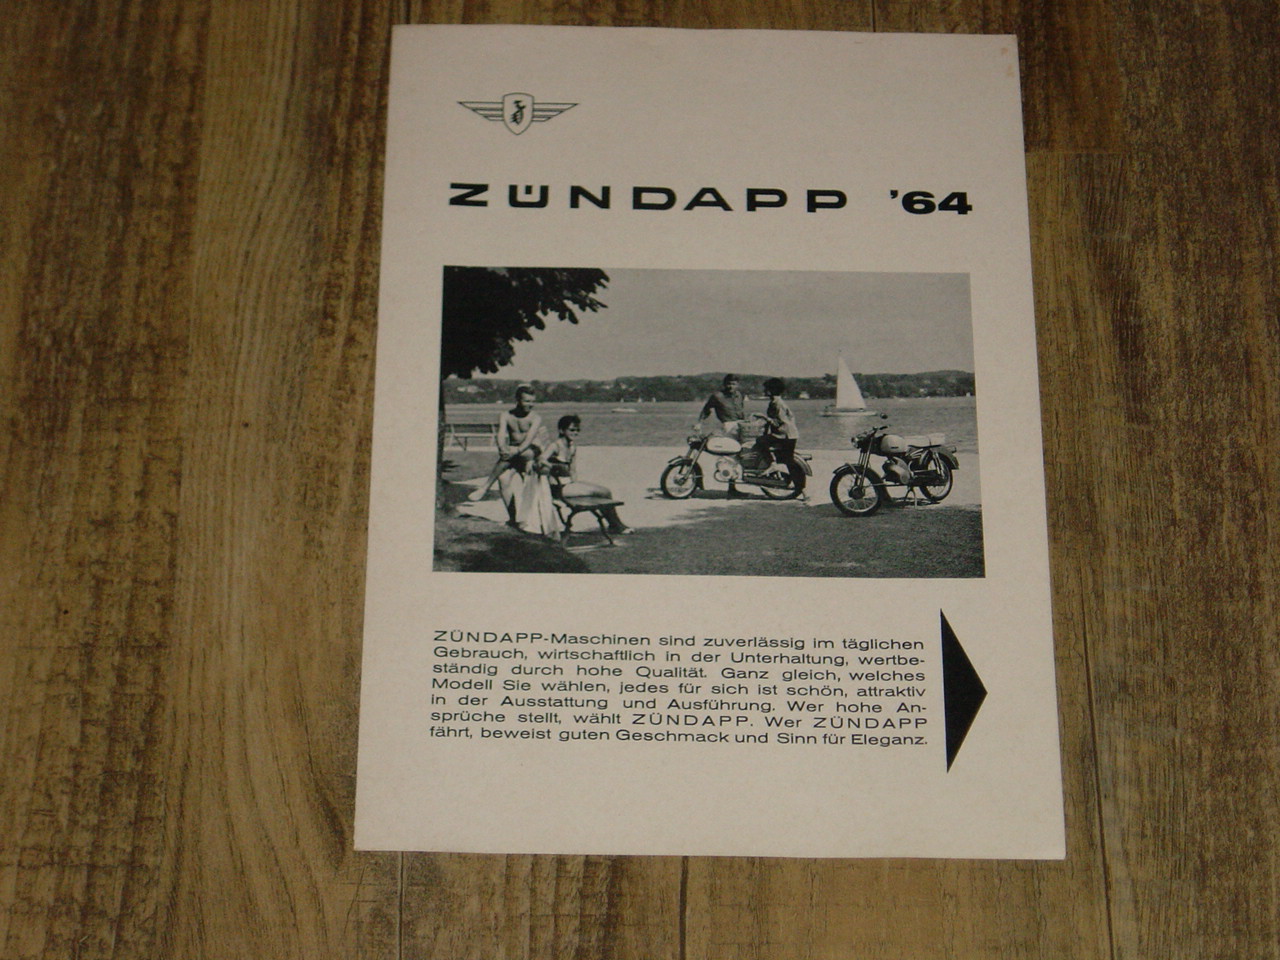 Promotional brochure D - Zündapp '64